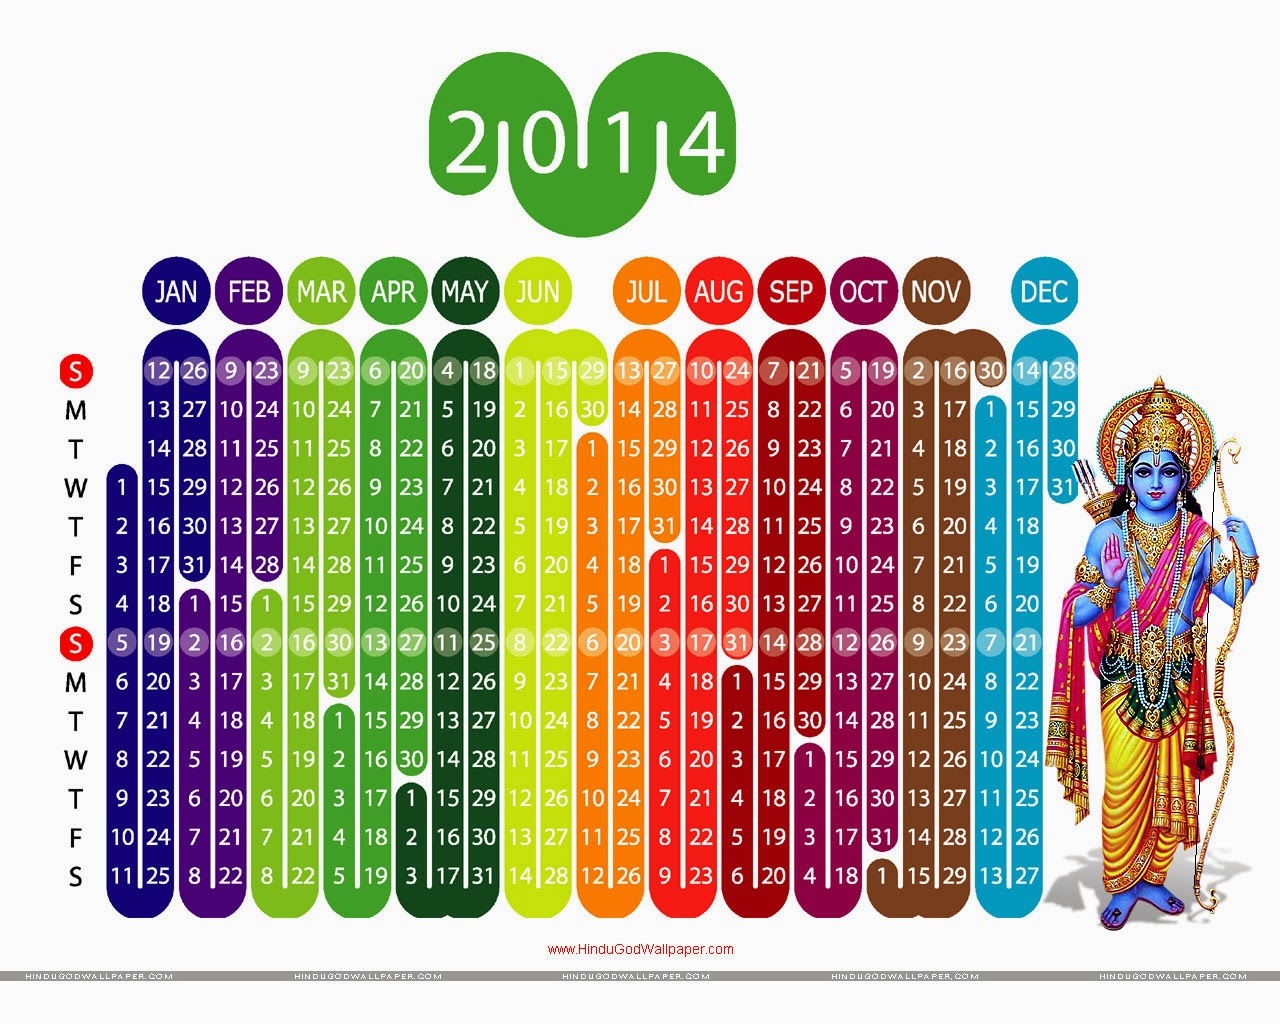 Calendar 2014 Wallpaper | Hindu God Wallpaper